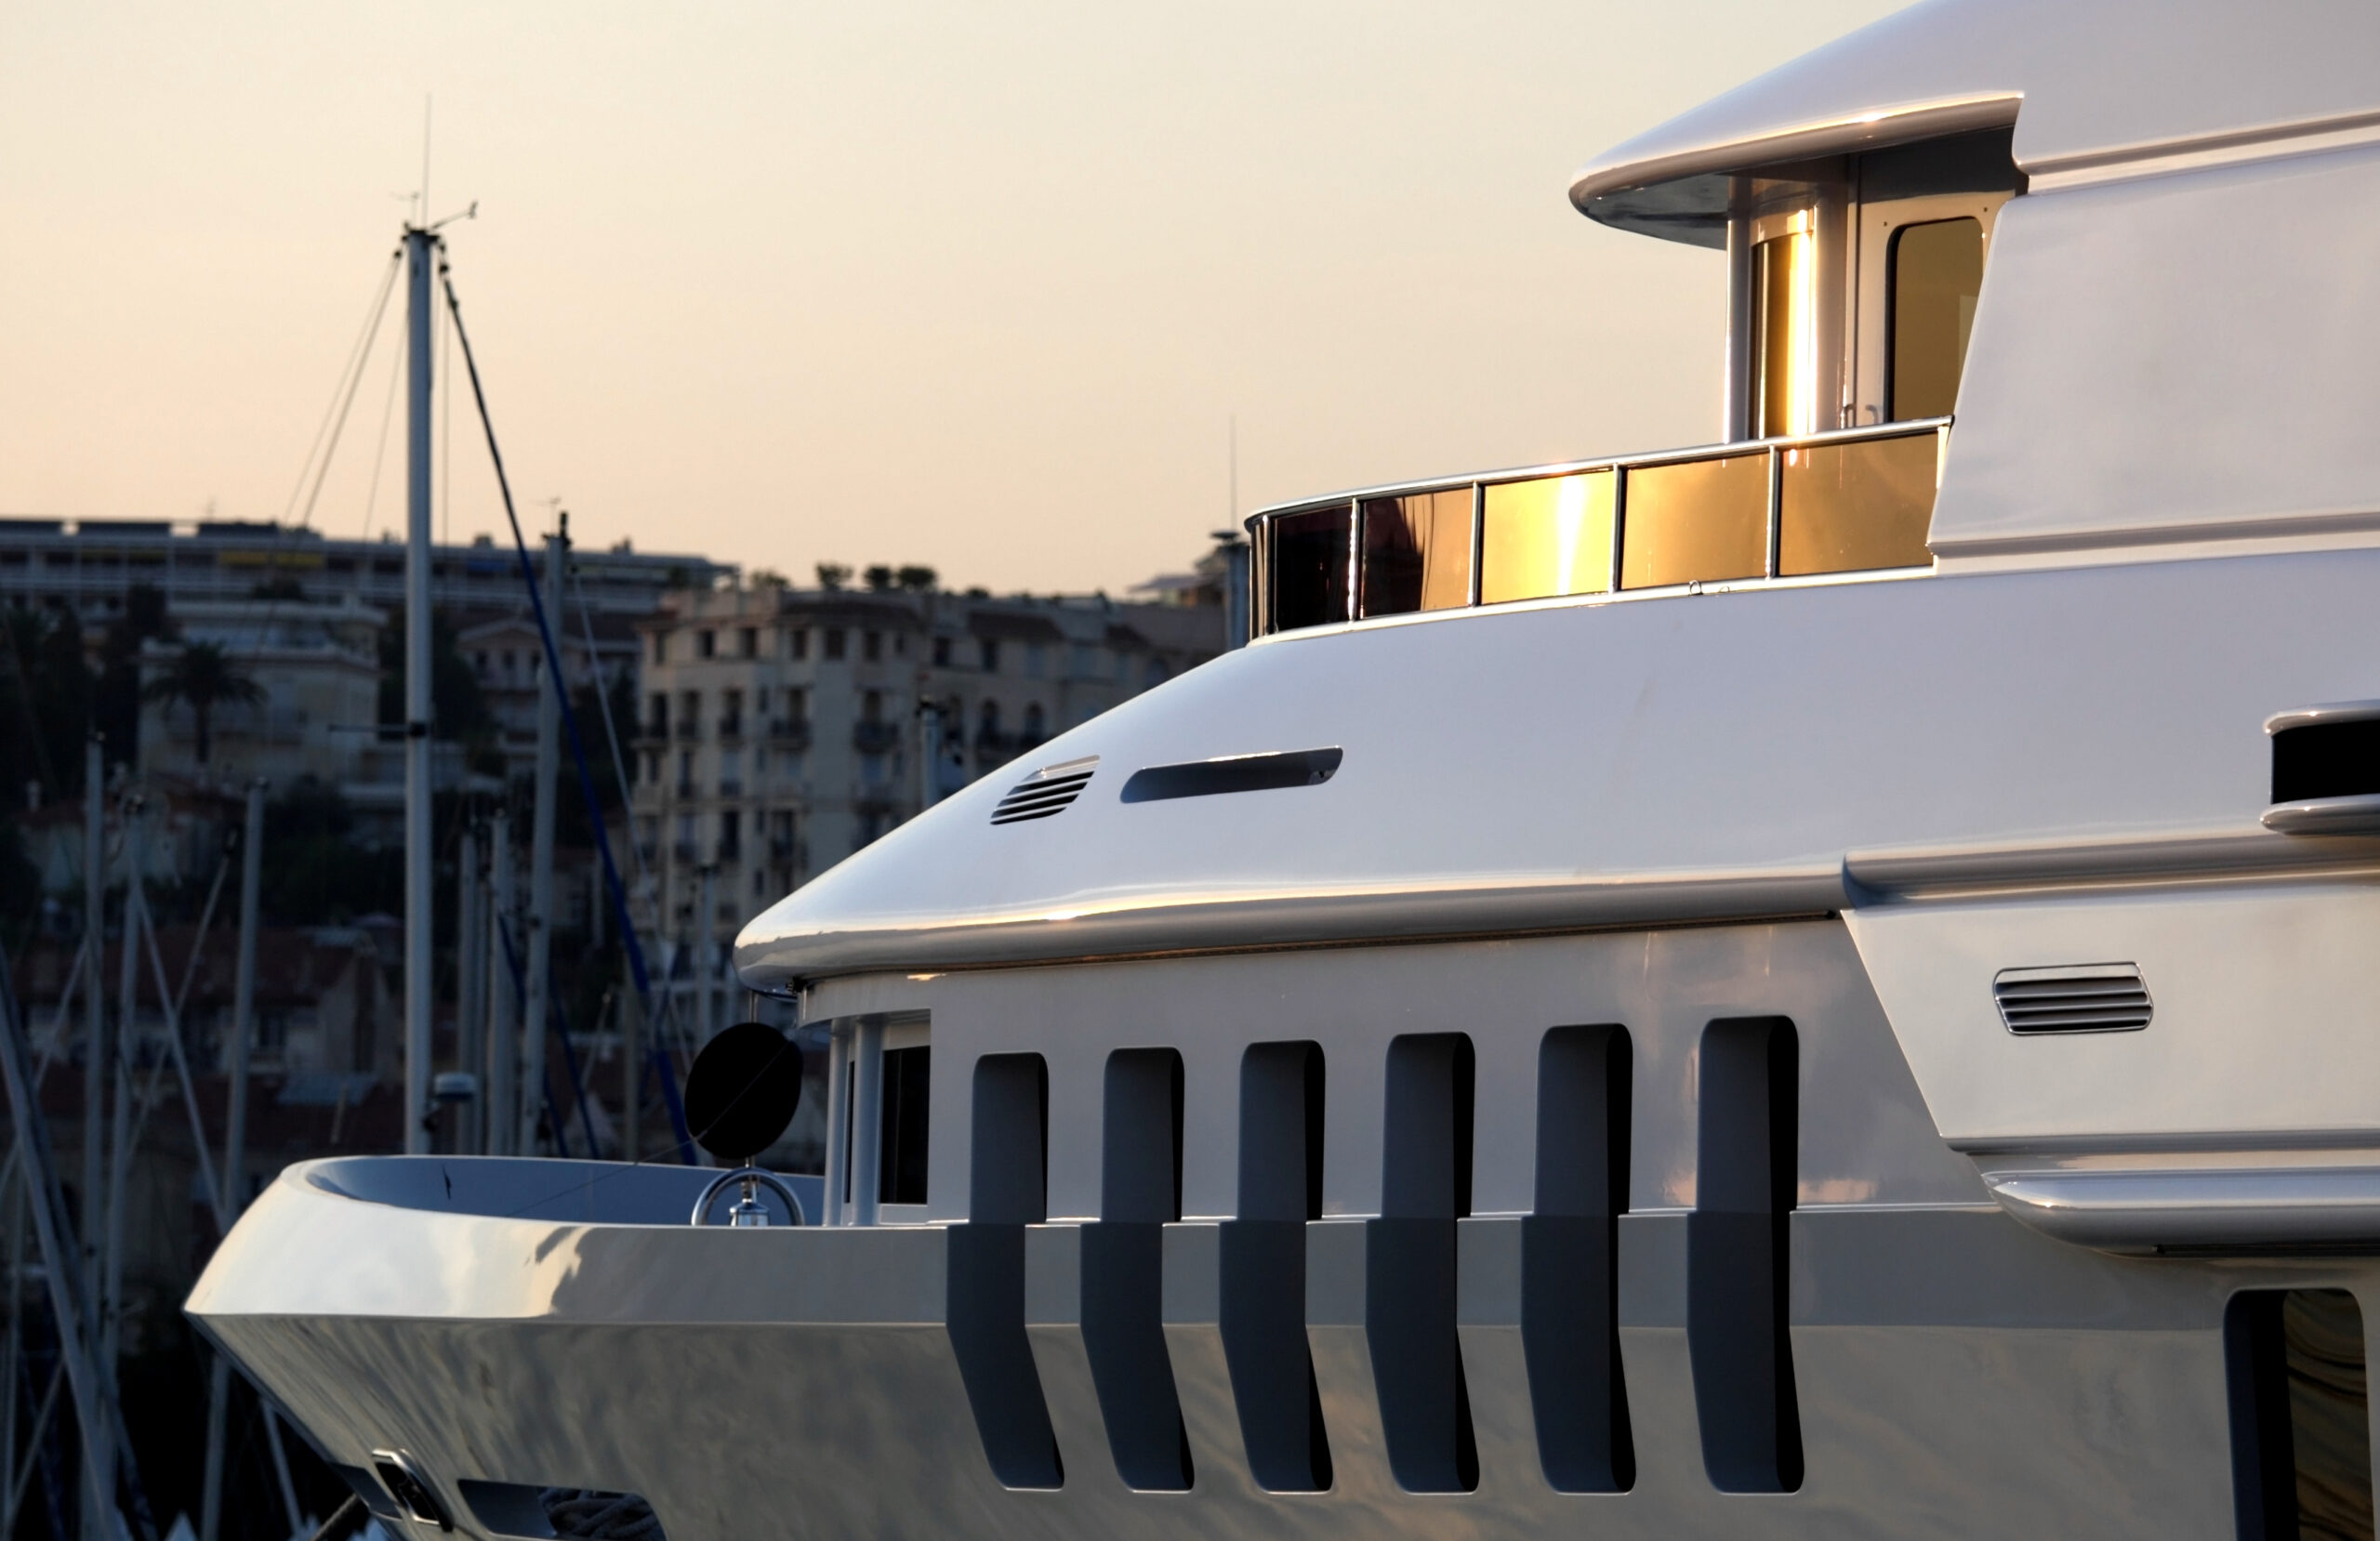 Futuristic yacht design